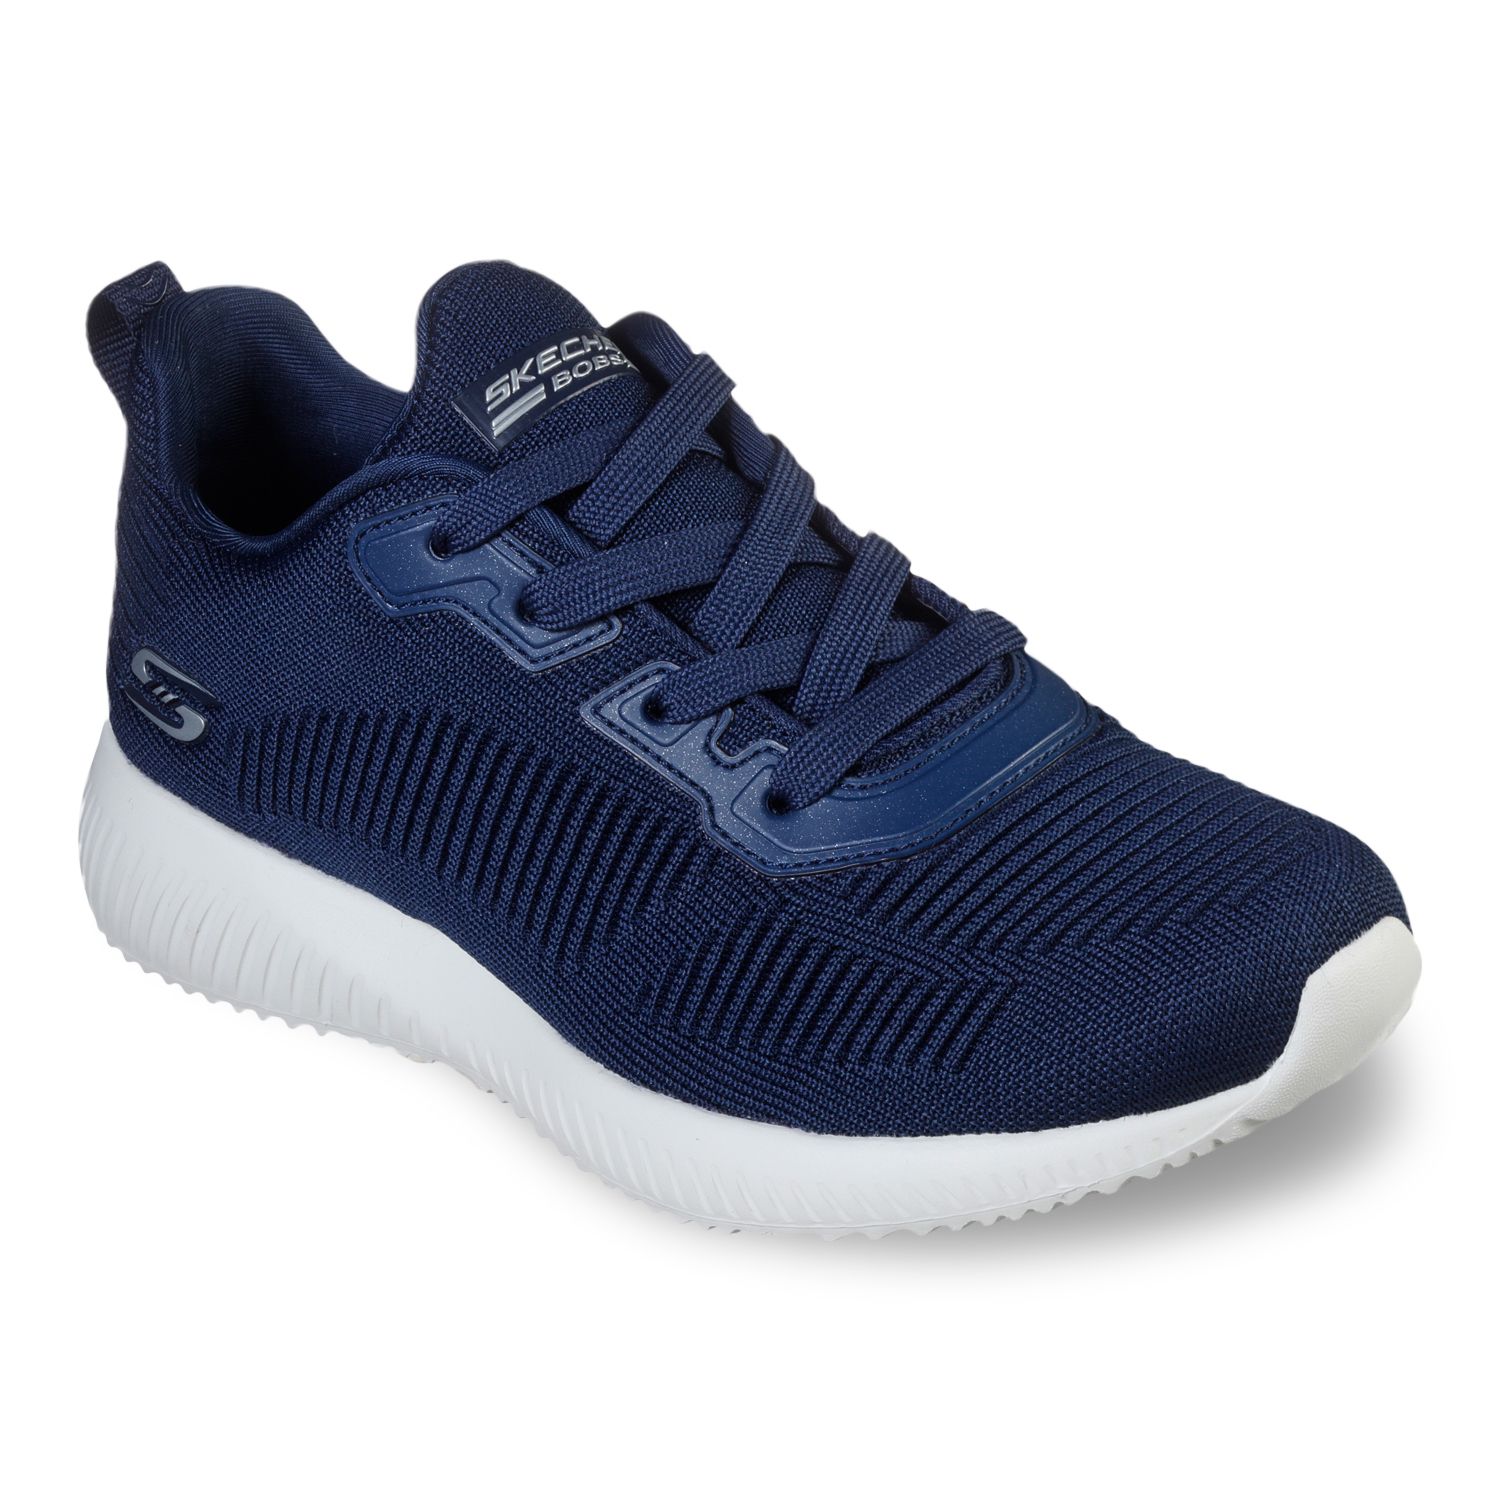 navy blue tennis shoes womens